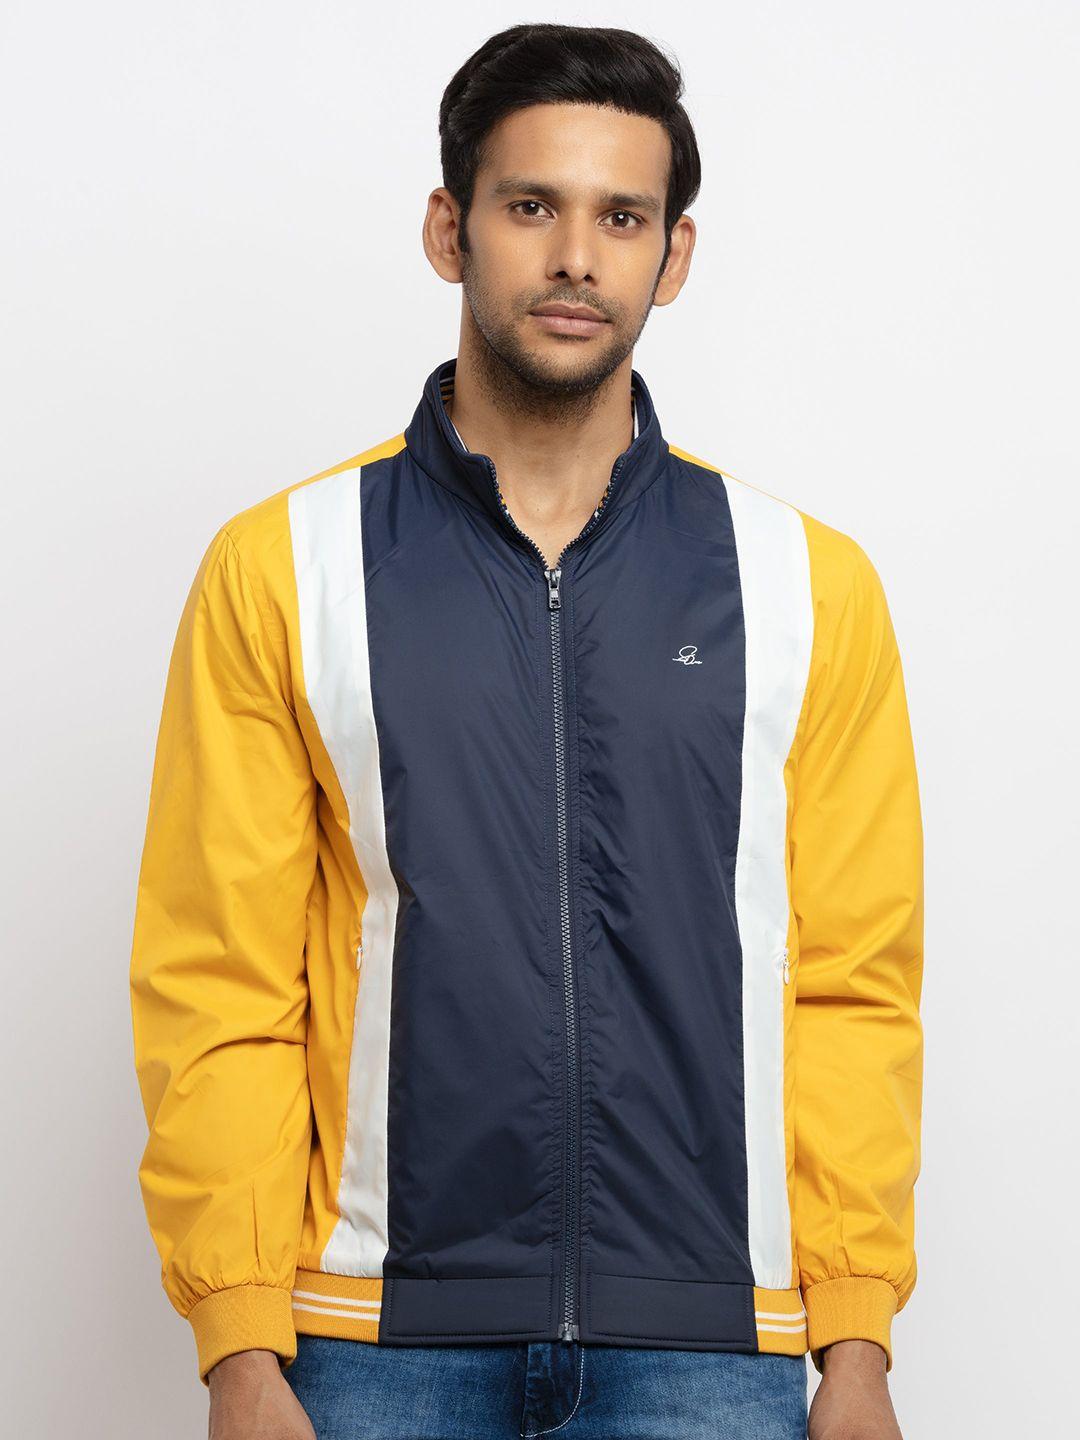 status-quo-men-gold-toned-colourblocked-sporty-jacket